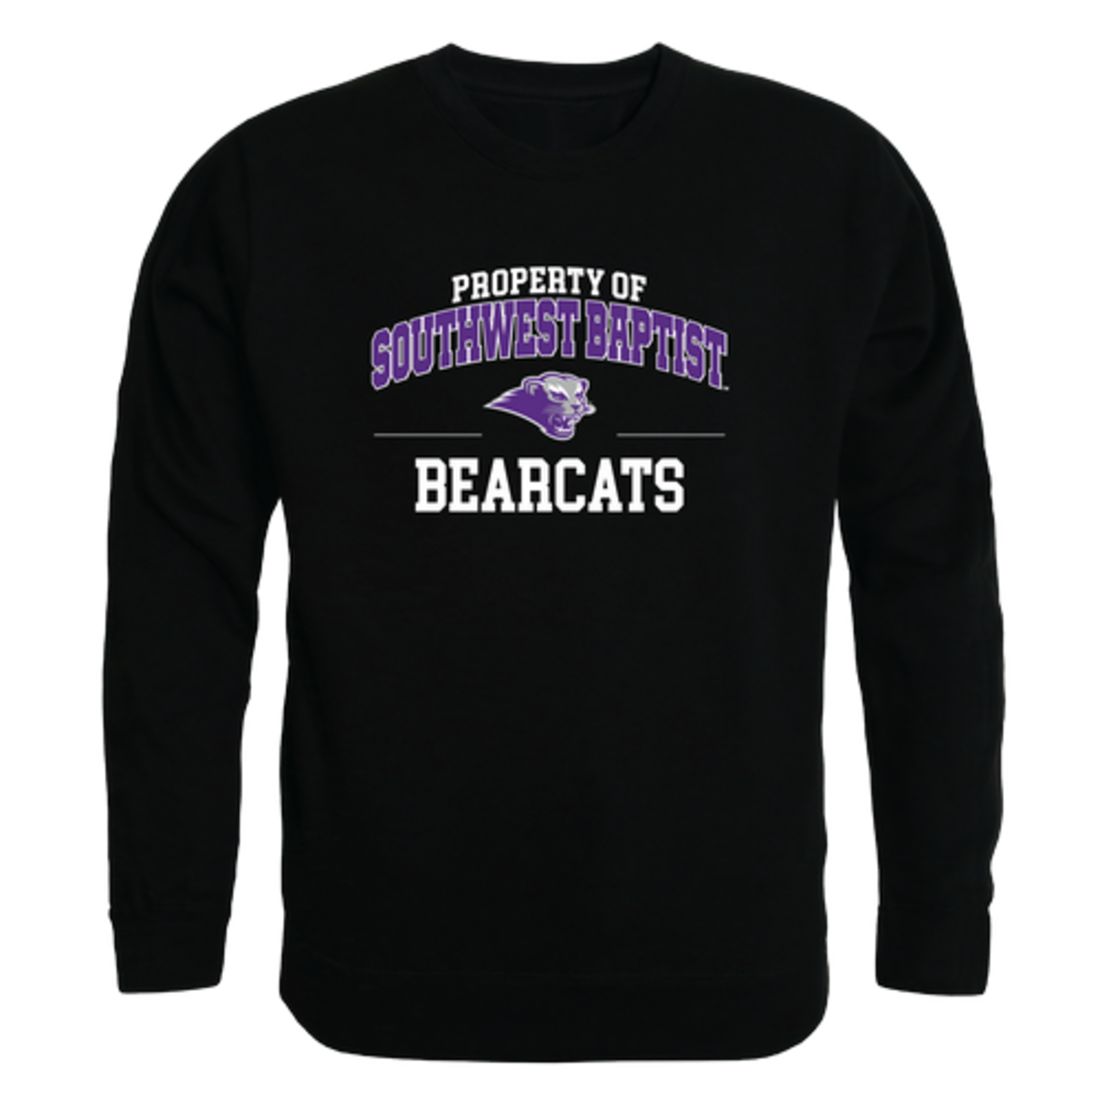 Southwest-Baptist-University-Bearcats-Property-Fleece-Crewneck-Pullover-Sweatshirt